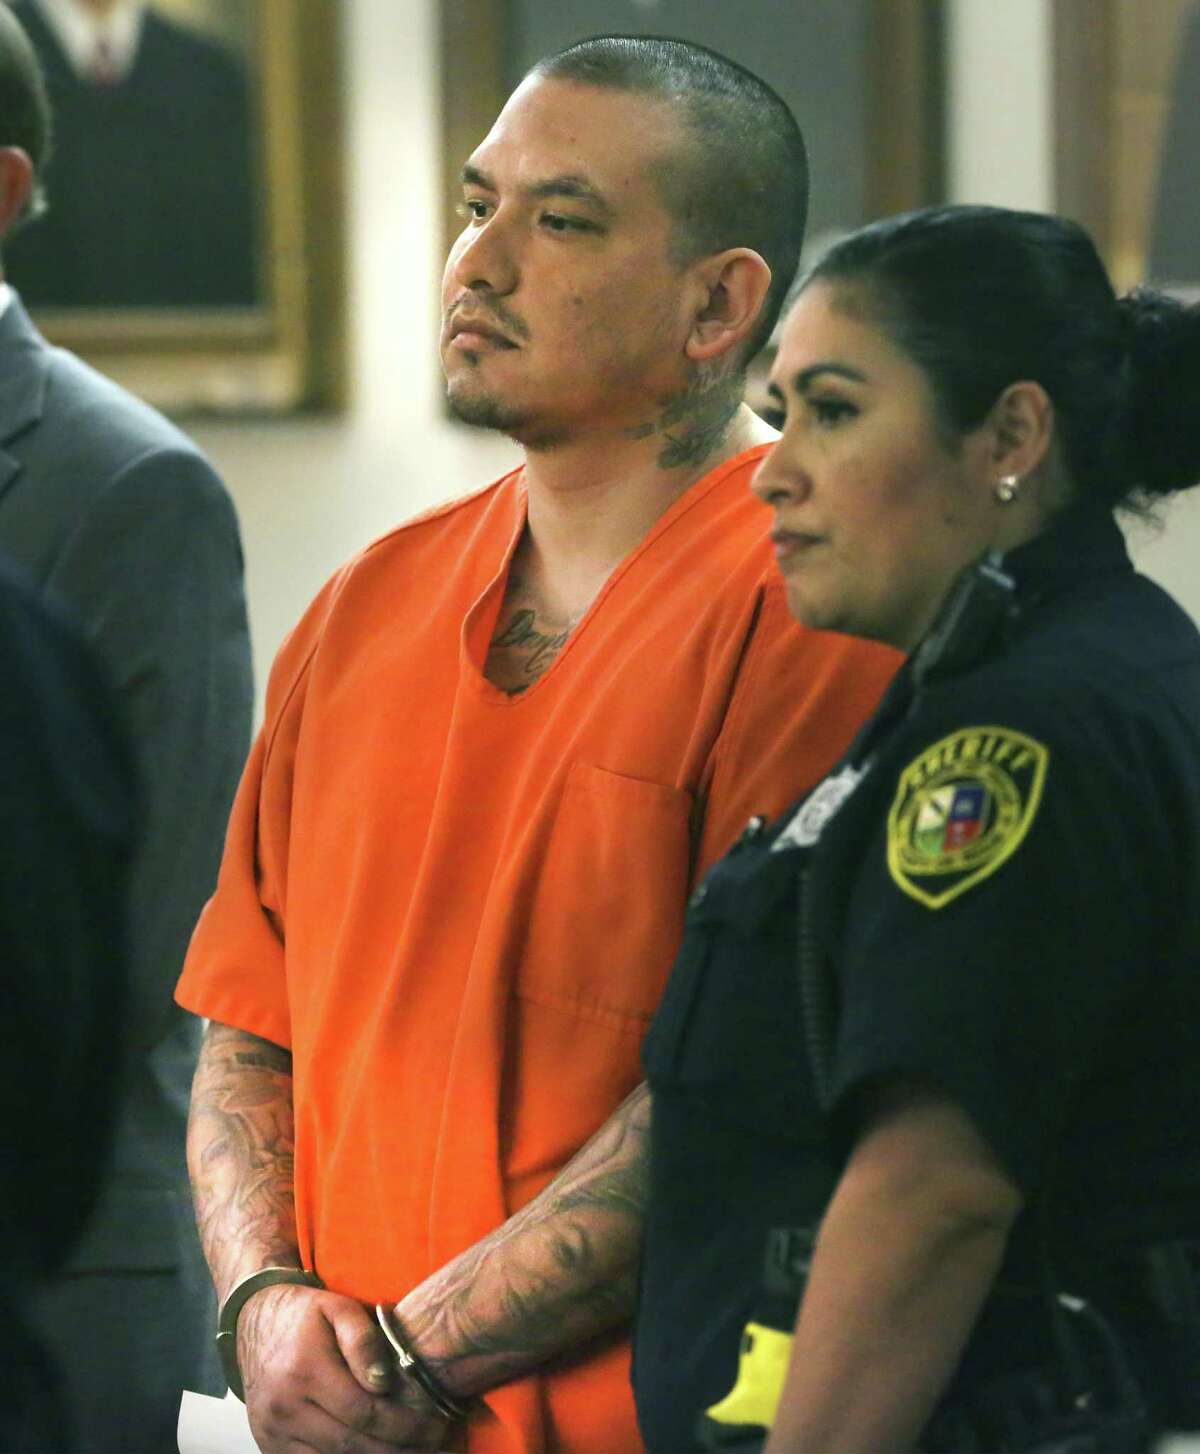 Judge denies mistrial in San Antonio dismemberment case